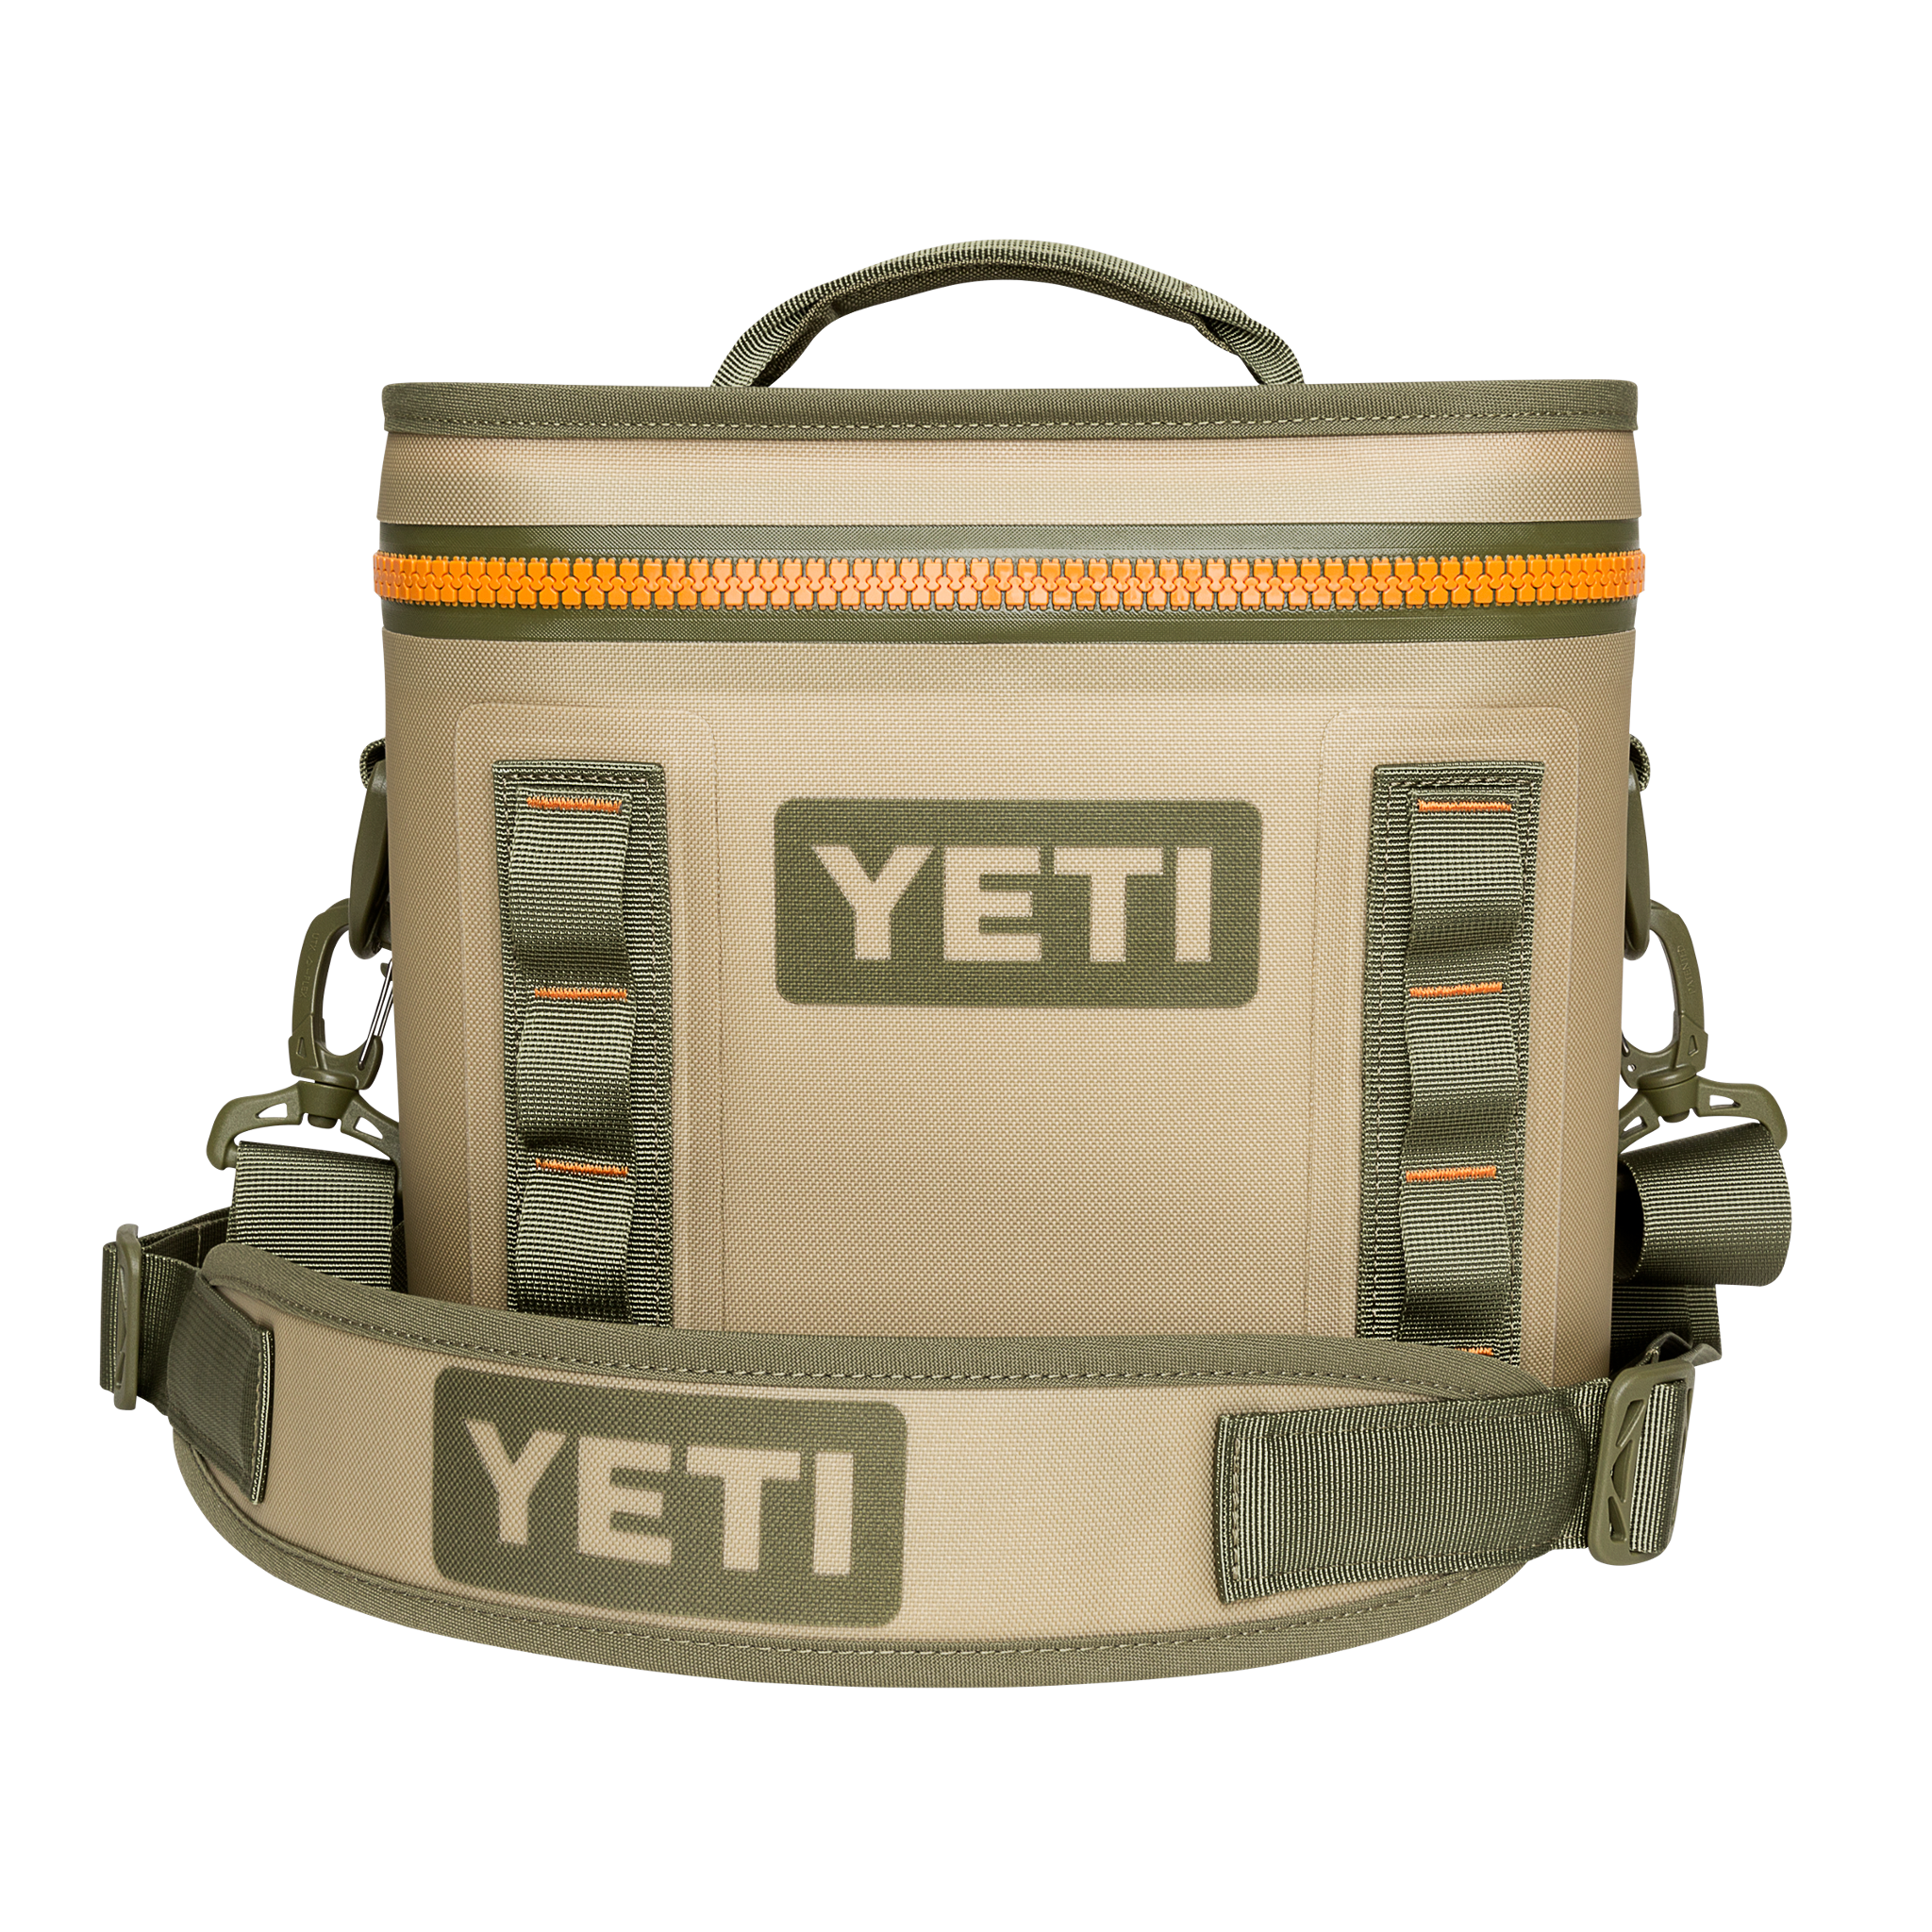 yeti carry cooler